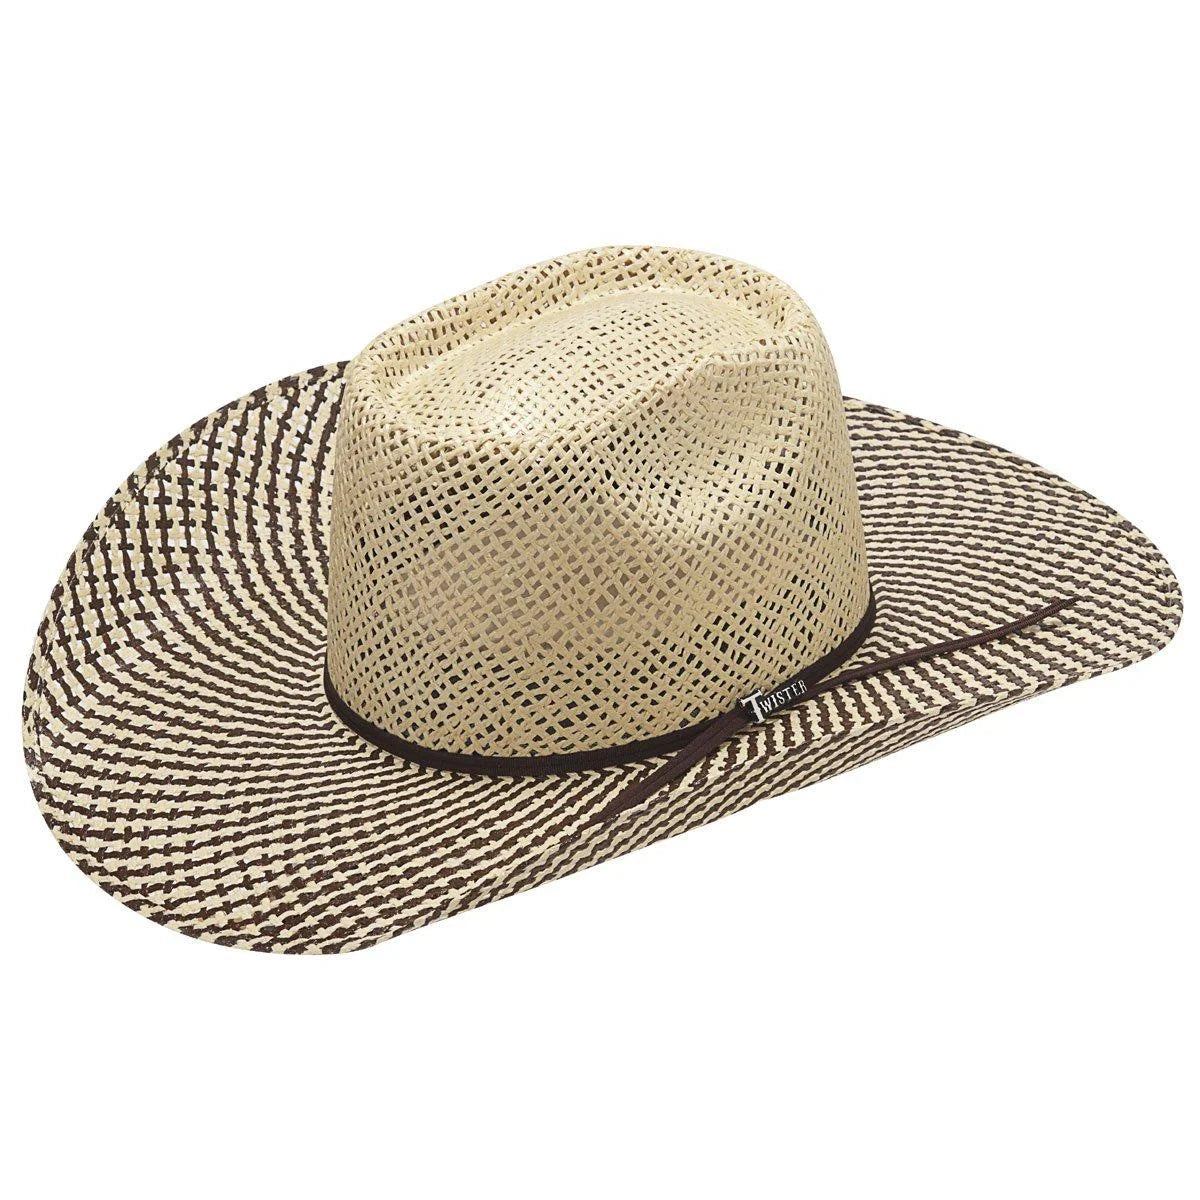 Two Cord Straw Cowboy Hat